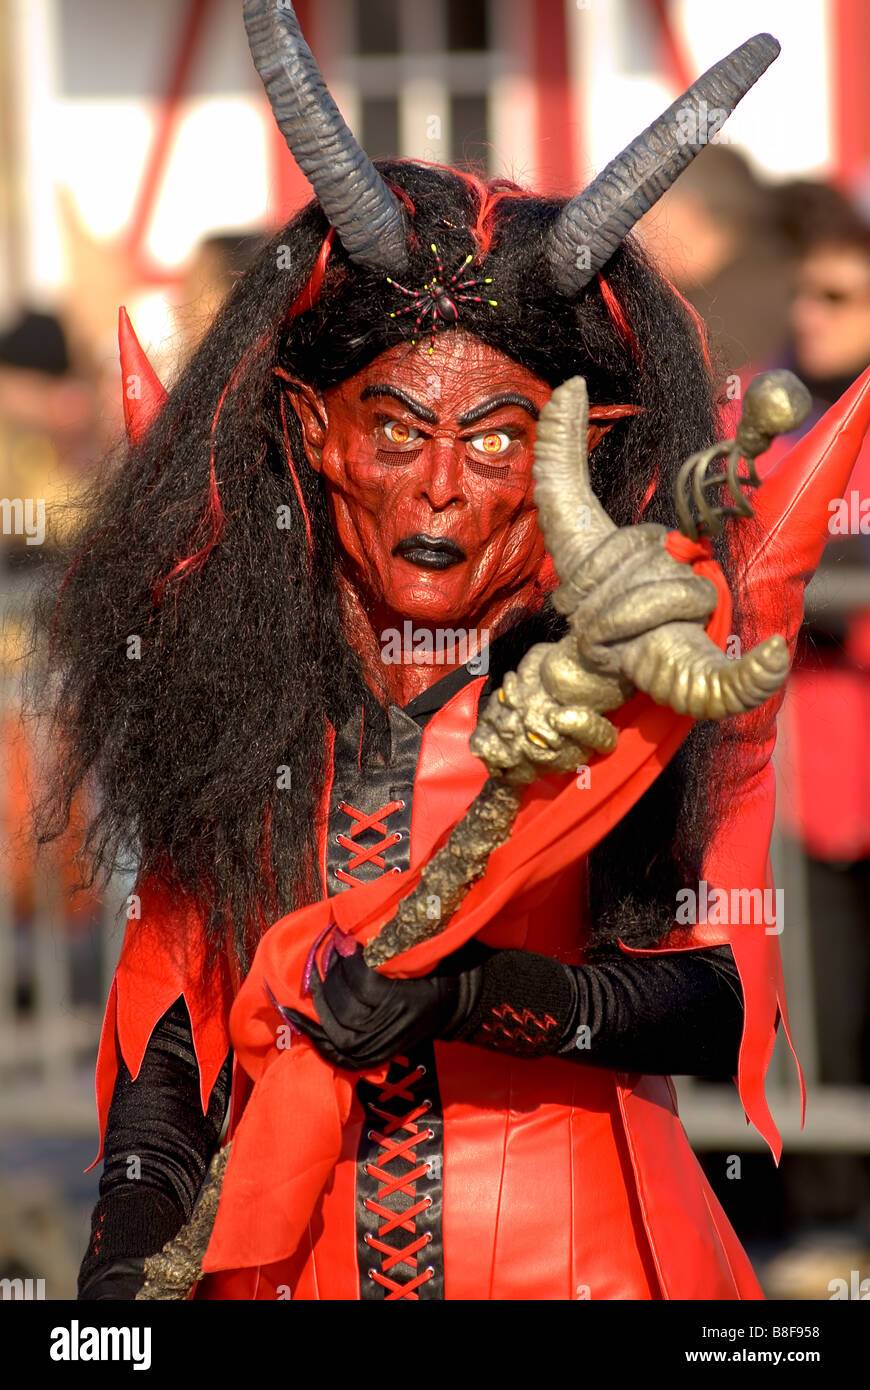 Immagine di una paurosa e misteriosa maschera di Carnevale durante Fastnacht in Lucerna, Svizzera Foto Stock